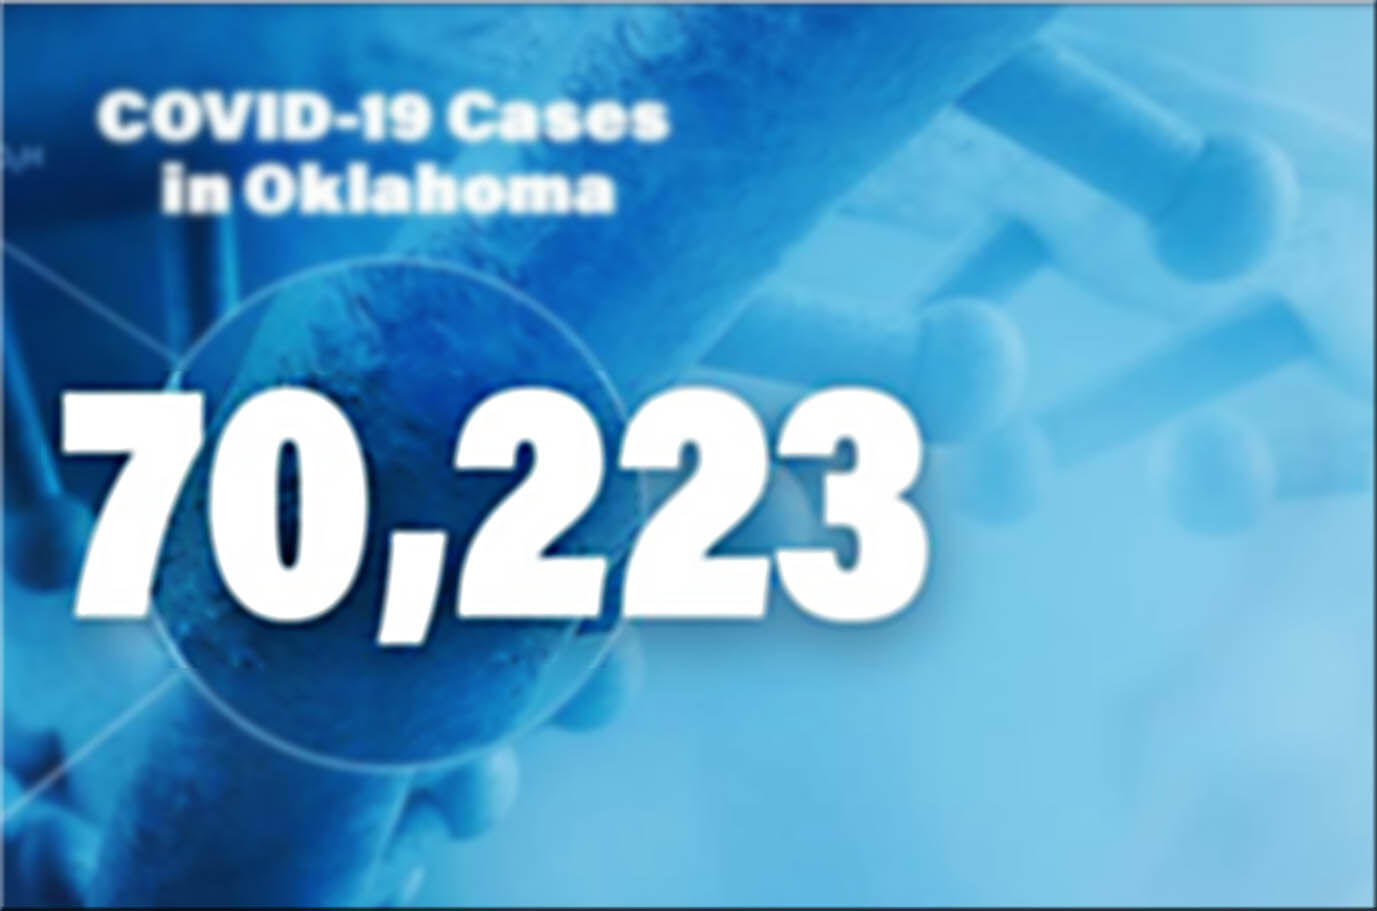 OSDH: Oklahoma has more than 10,000 